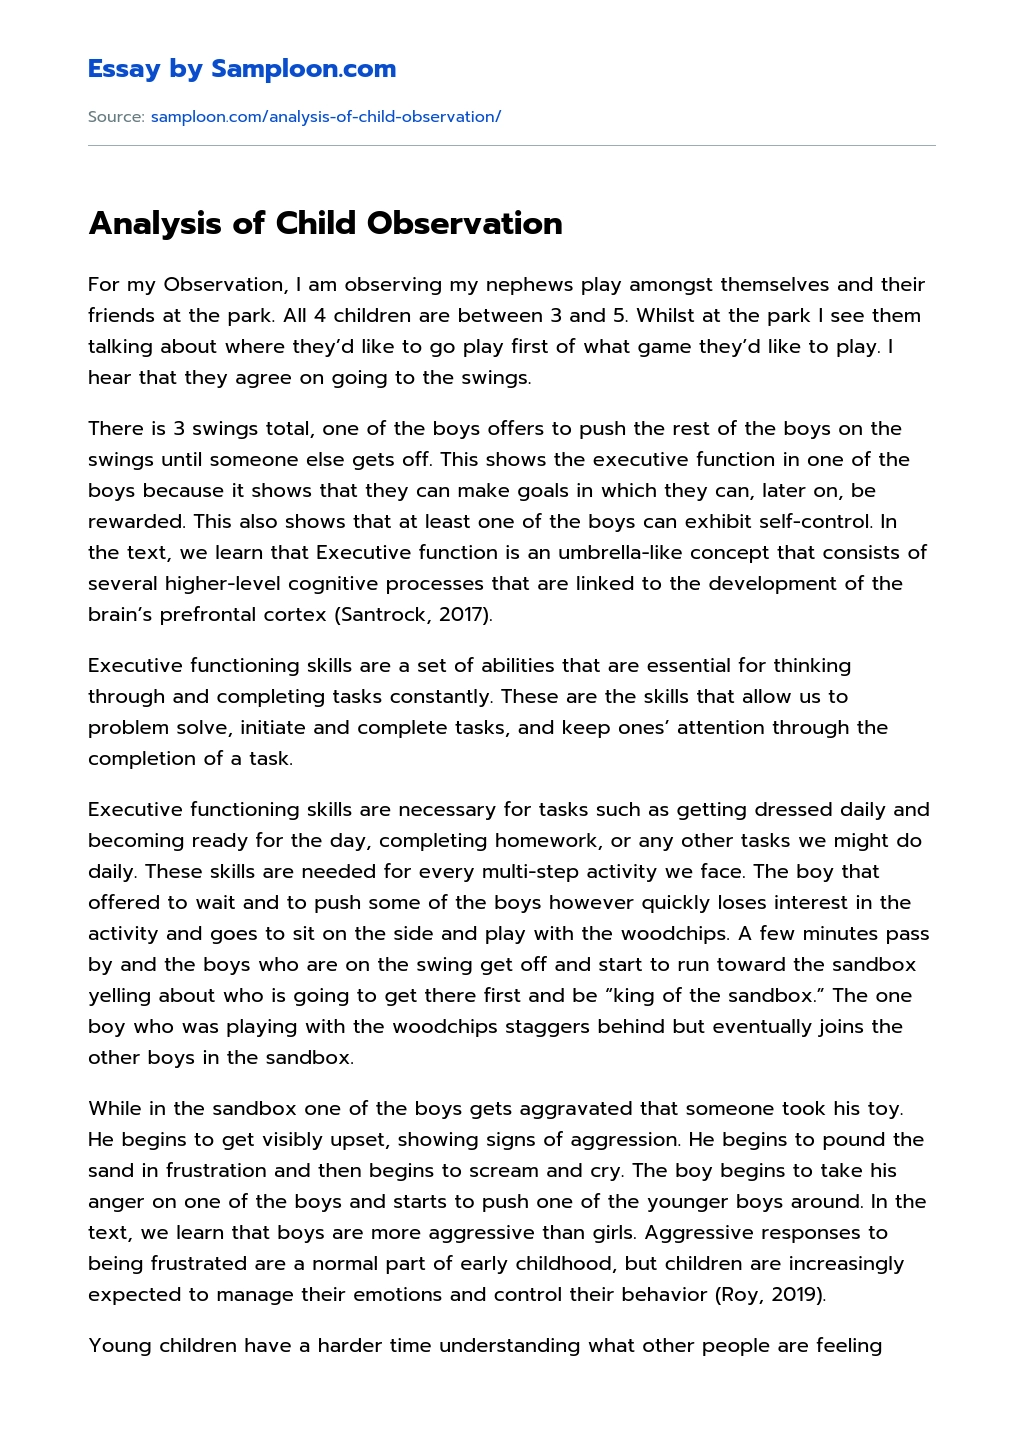 Analysis of Child Observation essay